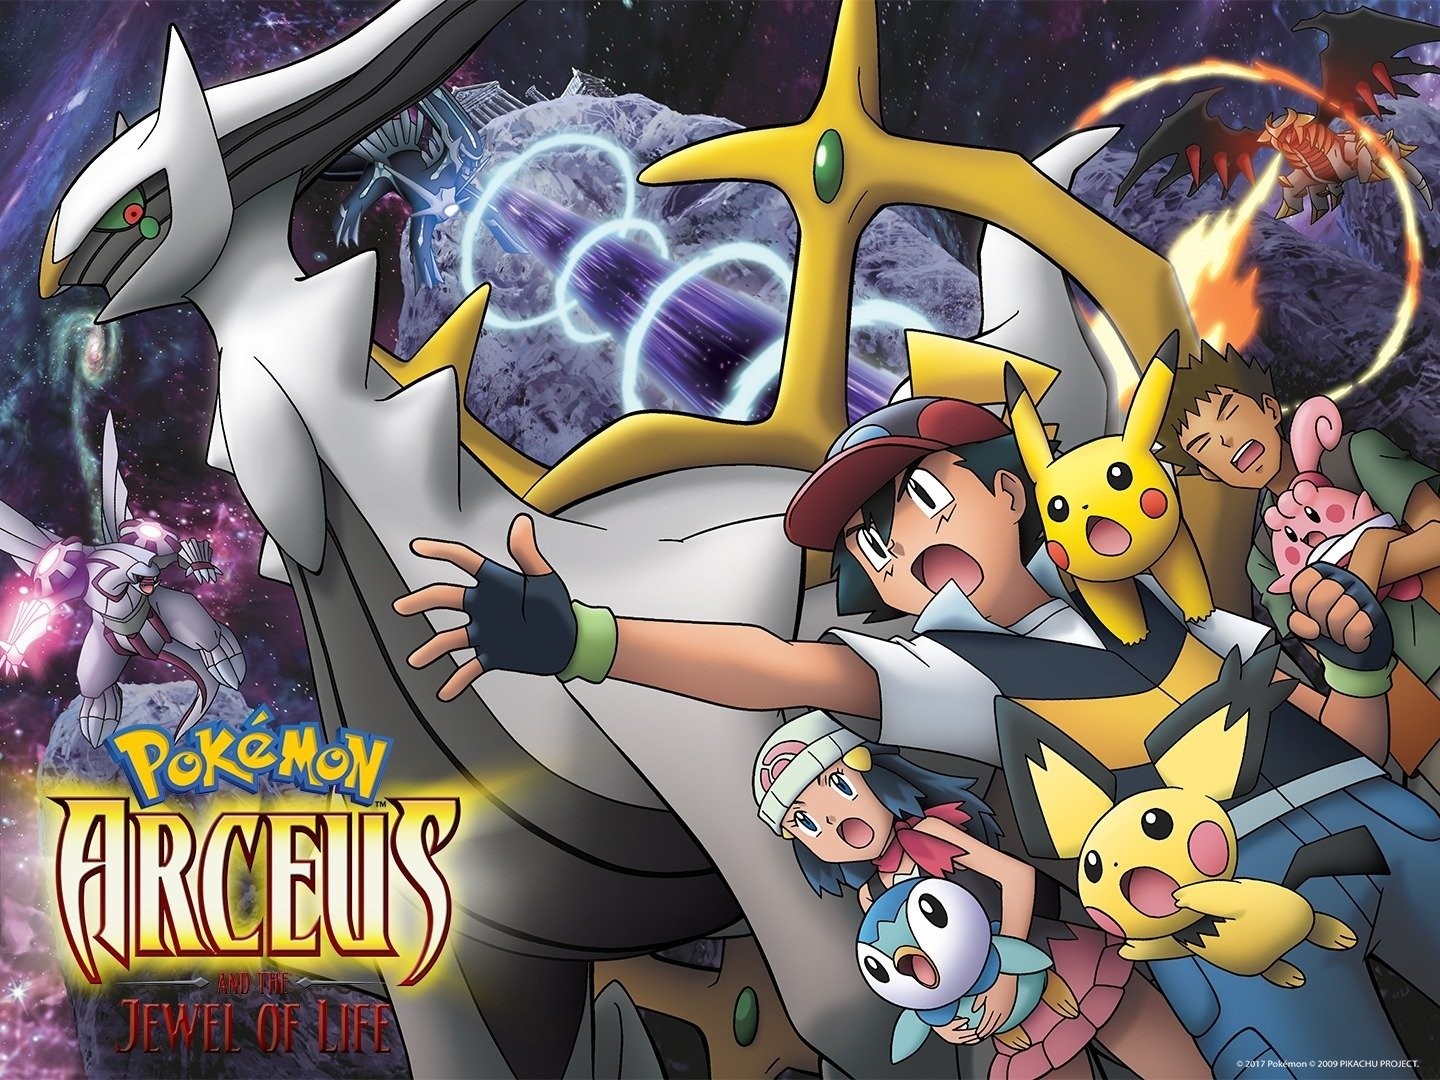 Pokémon: Arceus and the Jewel of Life (2009) - IMDb